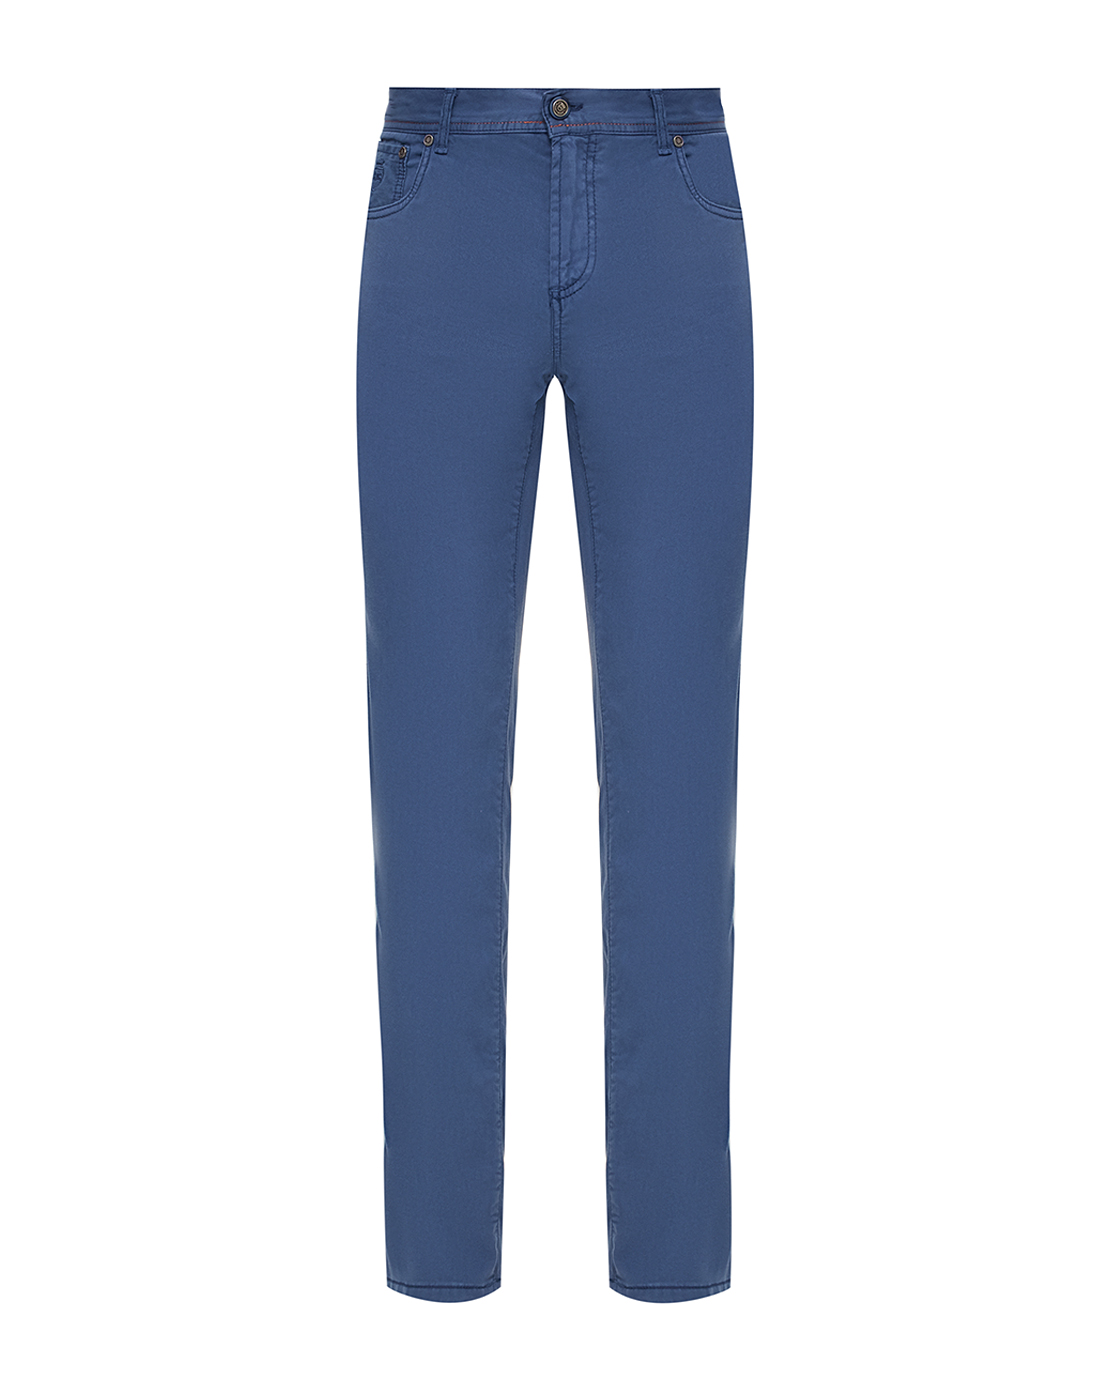 Мужские синие джинсы Richard J. Brown ST166.646-1